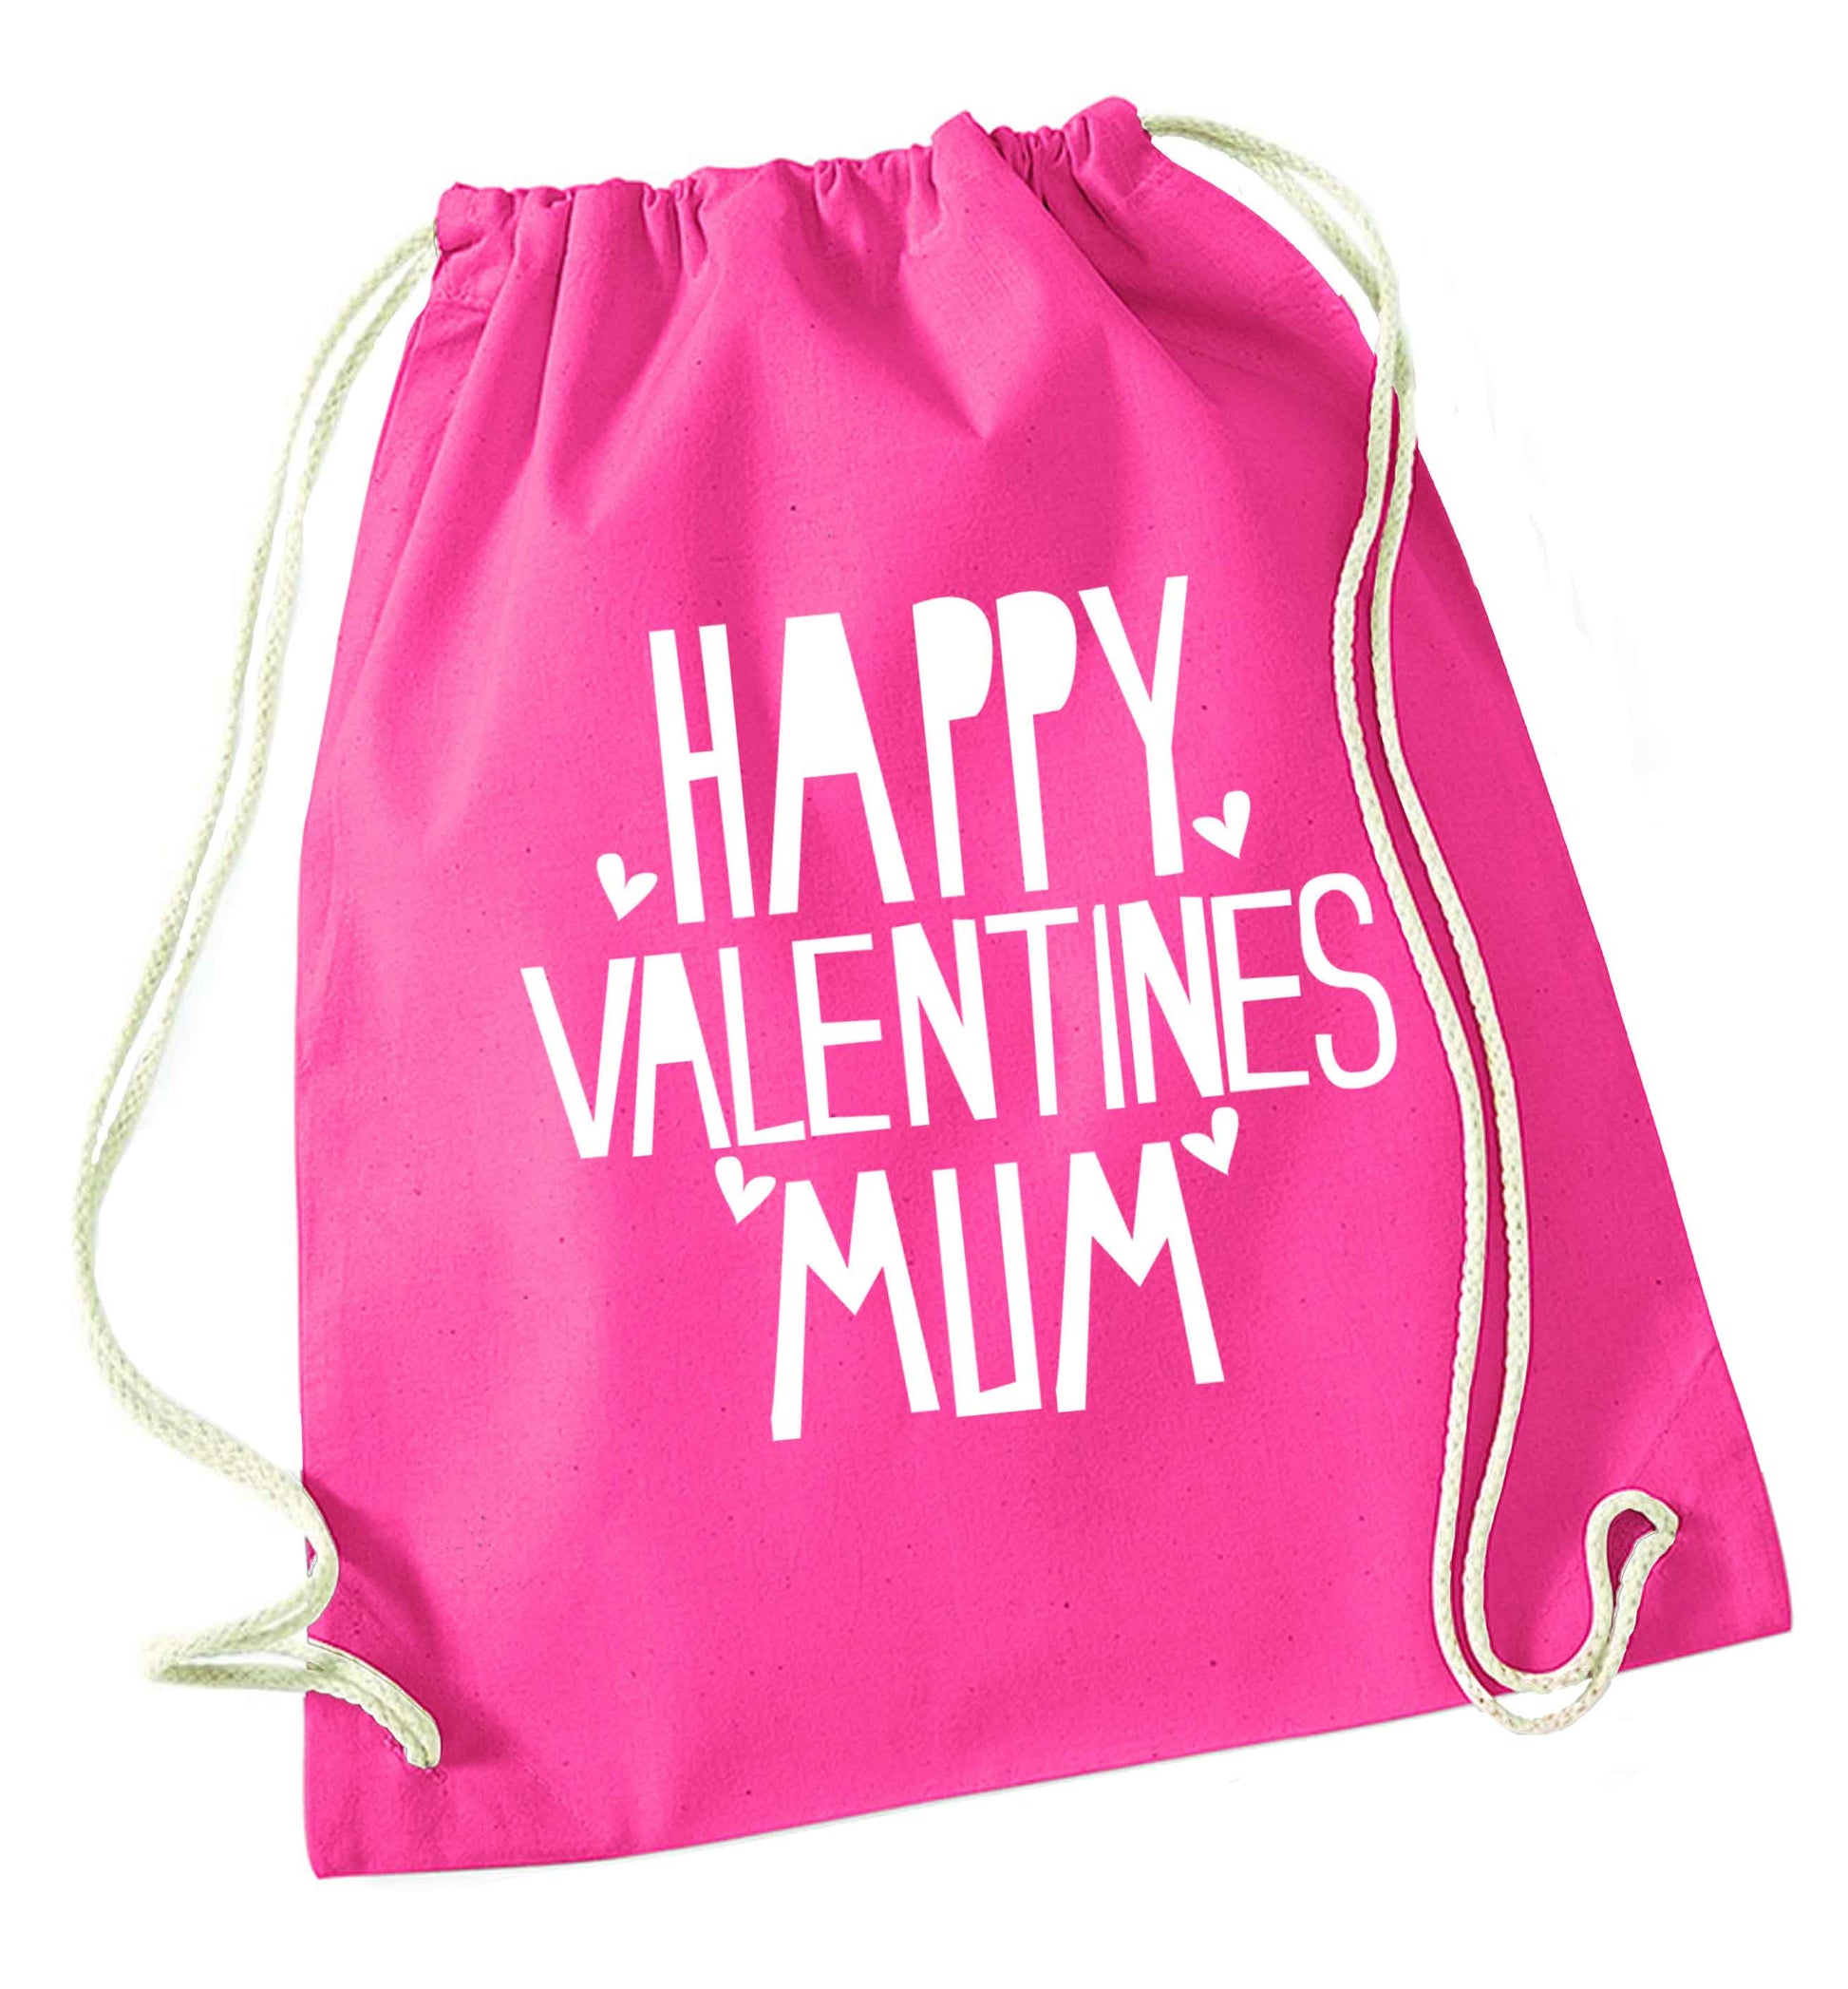 Happy valentines mum pink drawstring bag